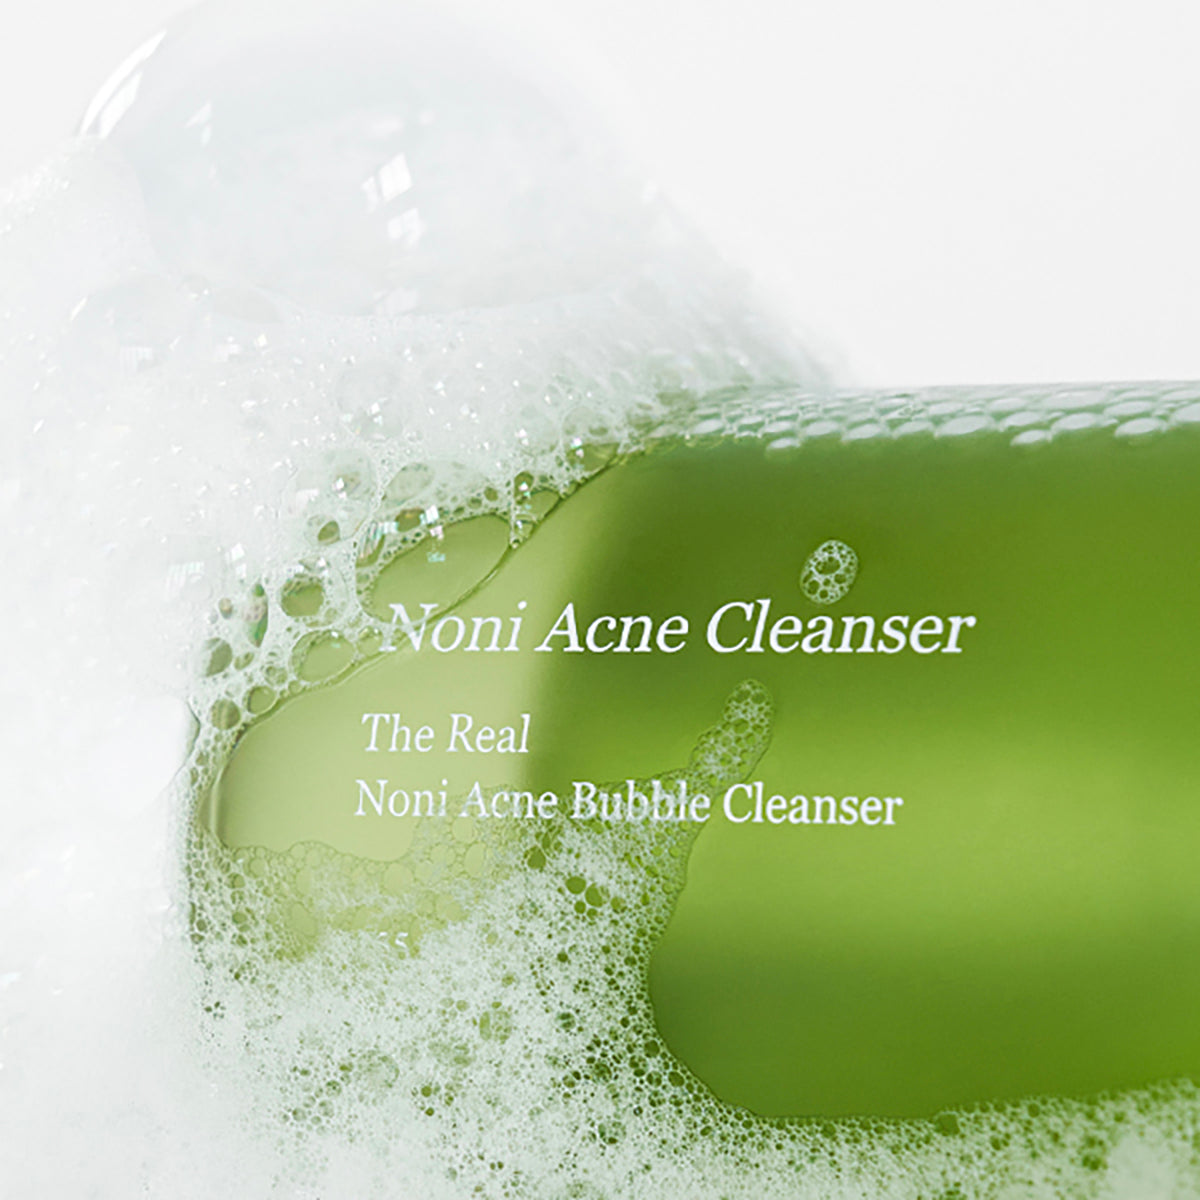 The Real Noni Acne Bubble Cleanser